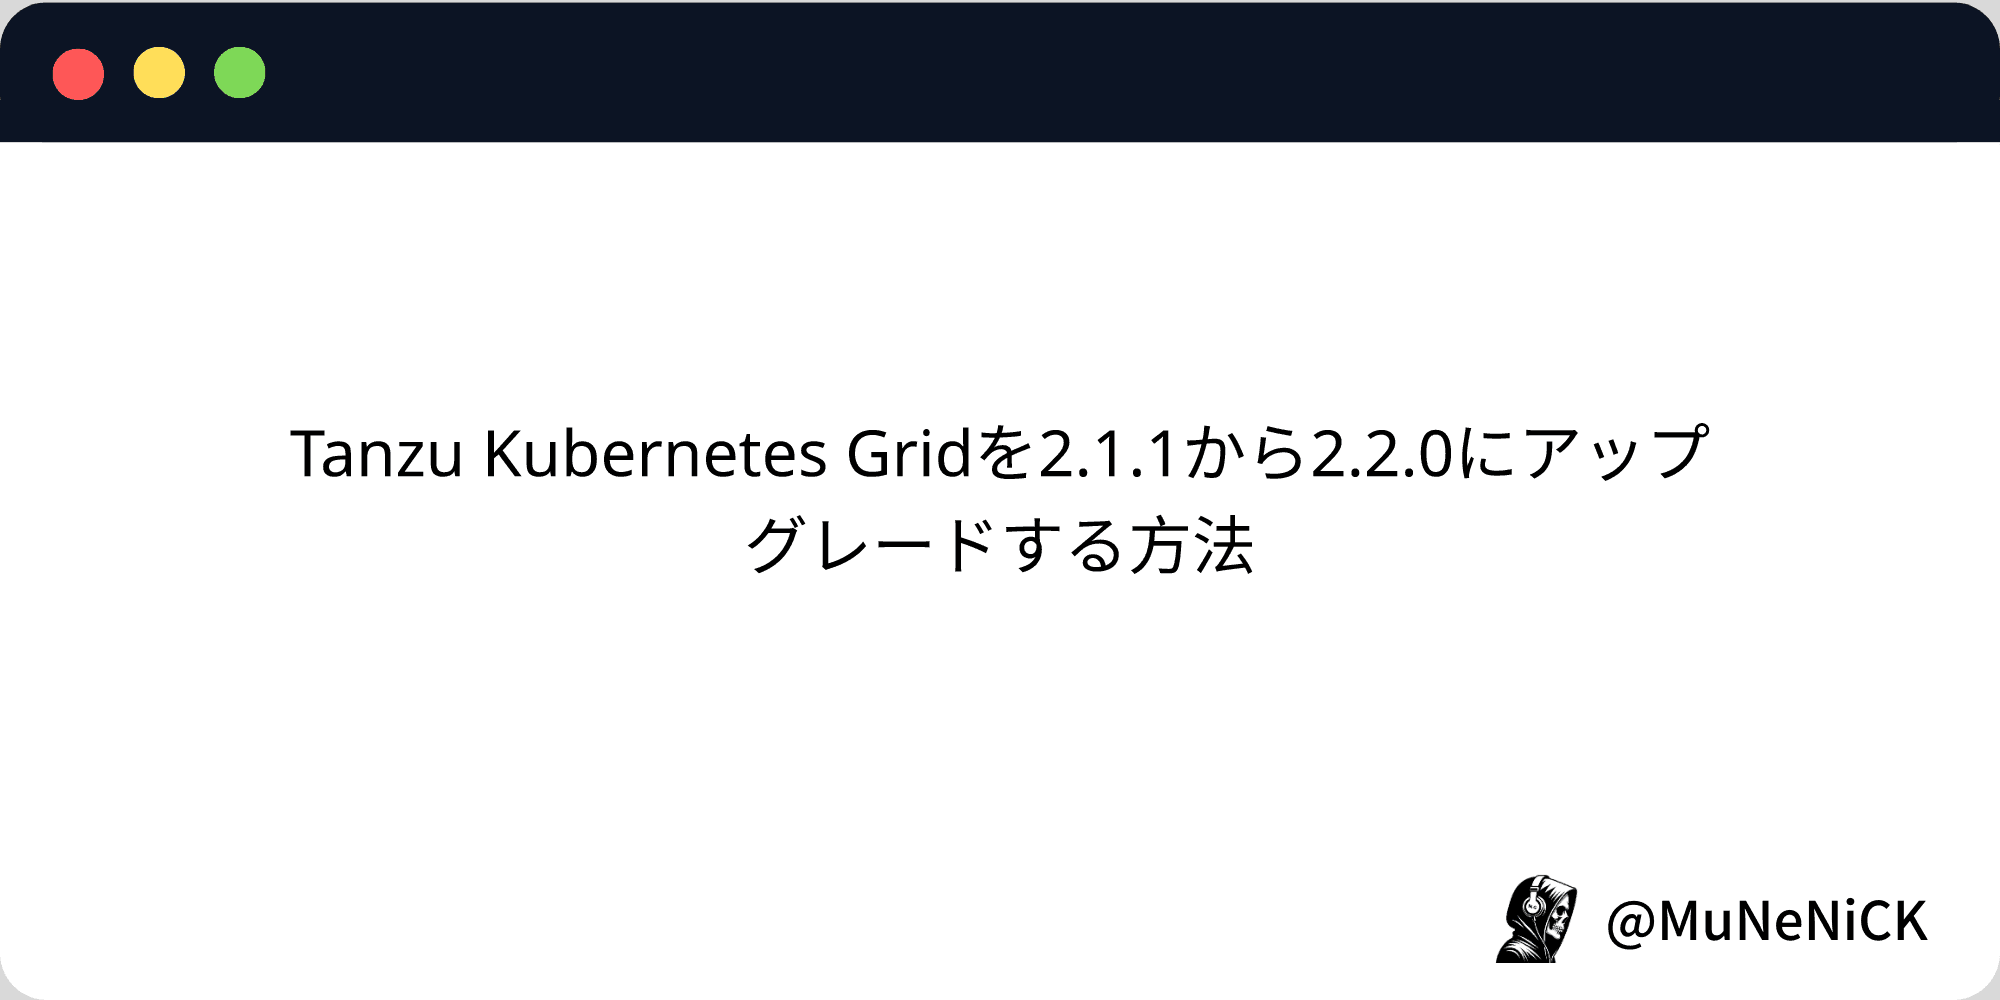 Cover Image for Tanzu Kubernetes Gridを2.1.1から2.2.0にアップグレードする方法